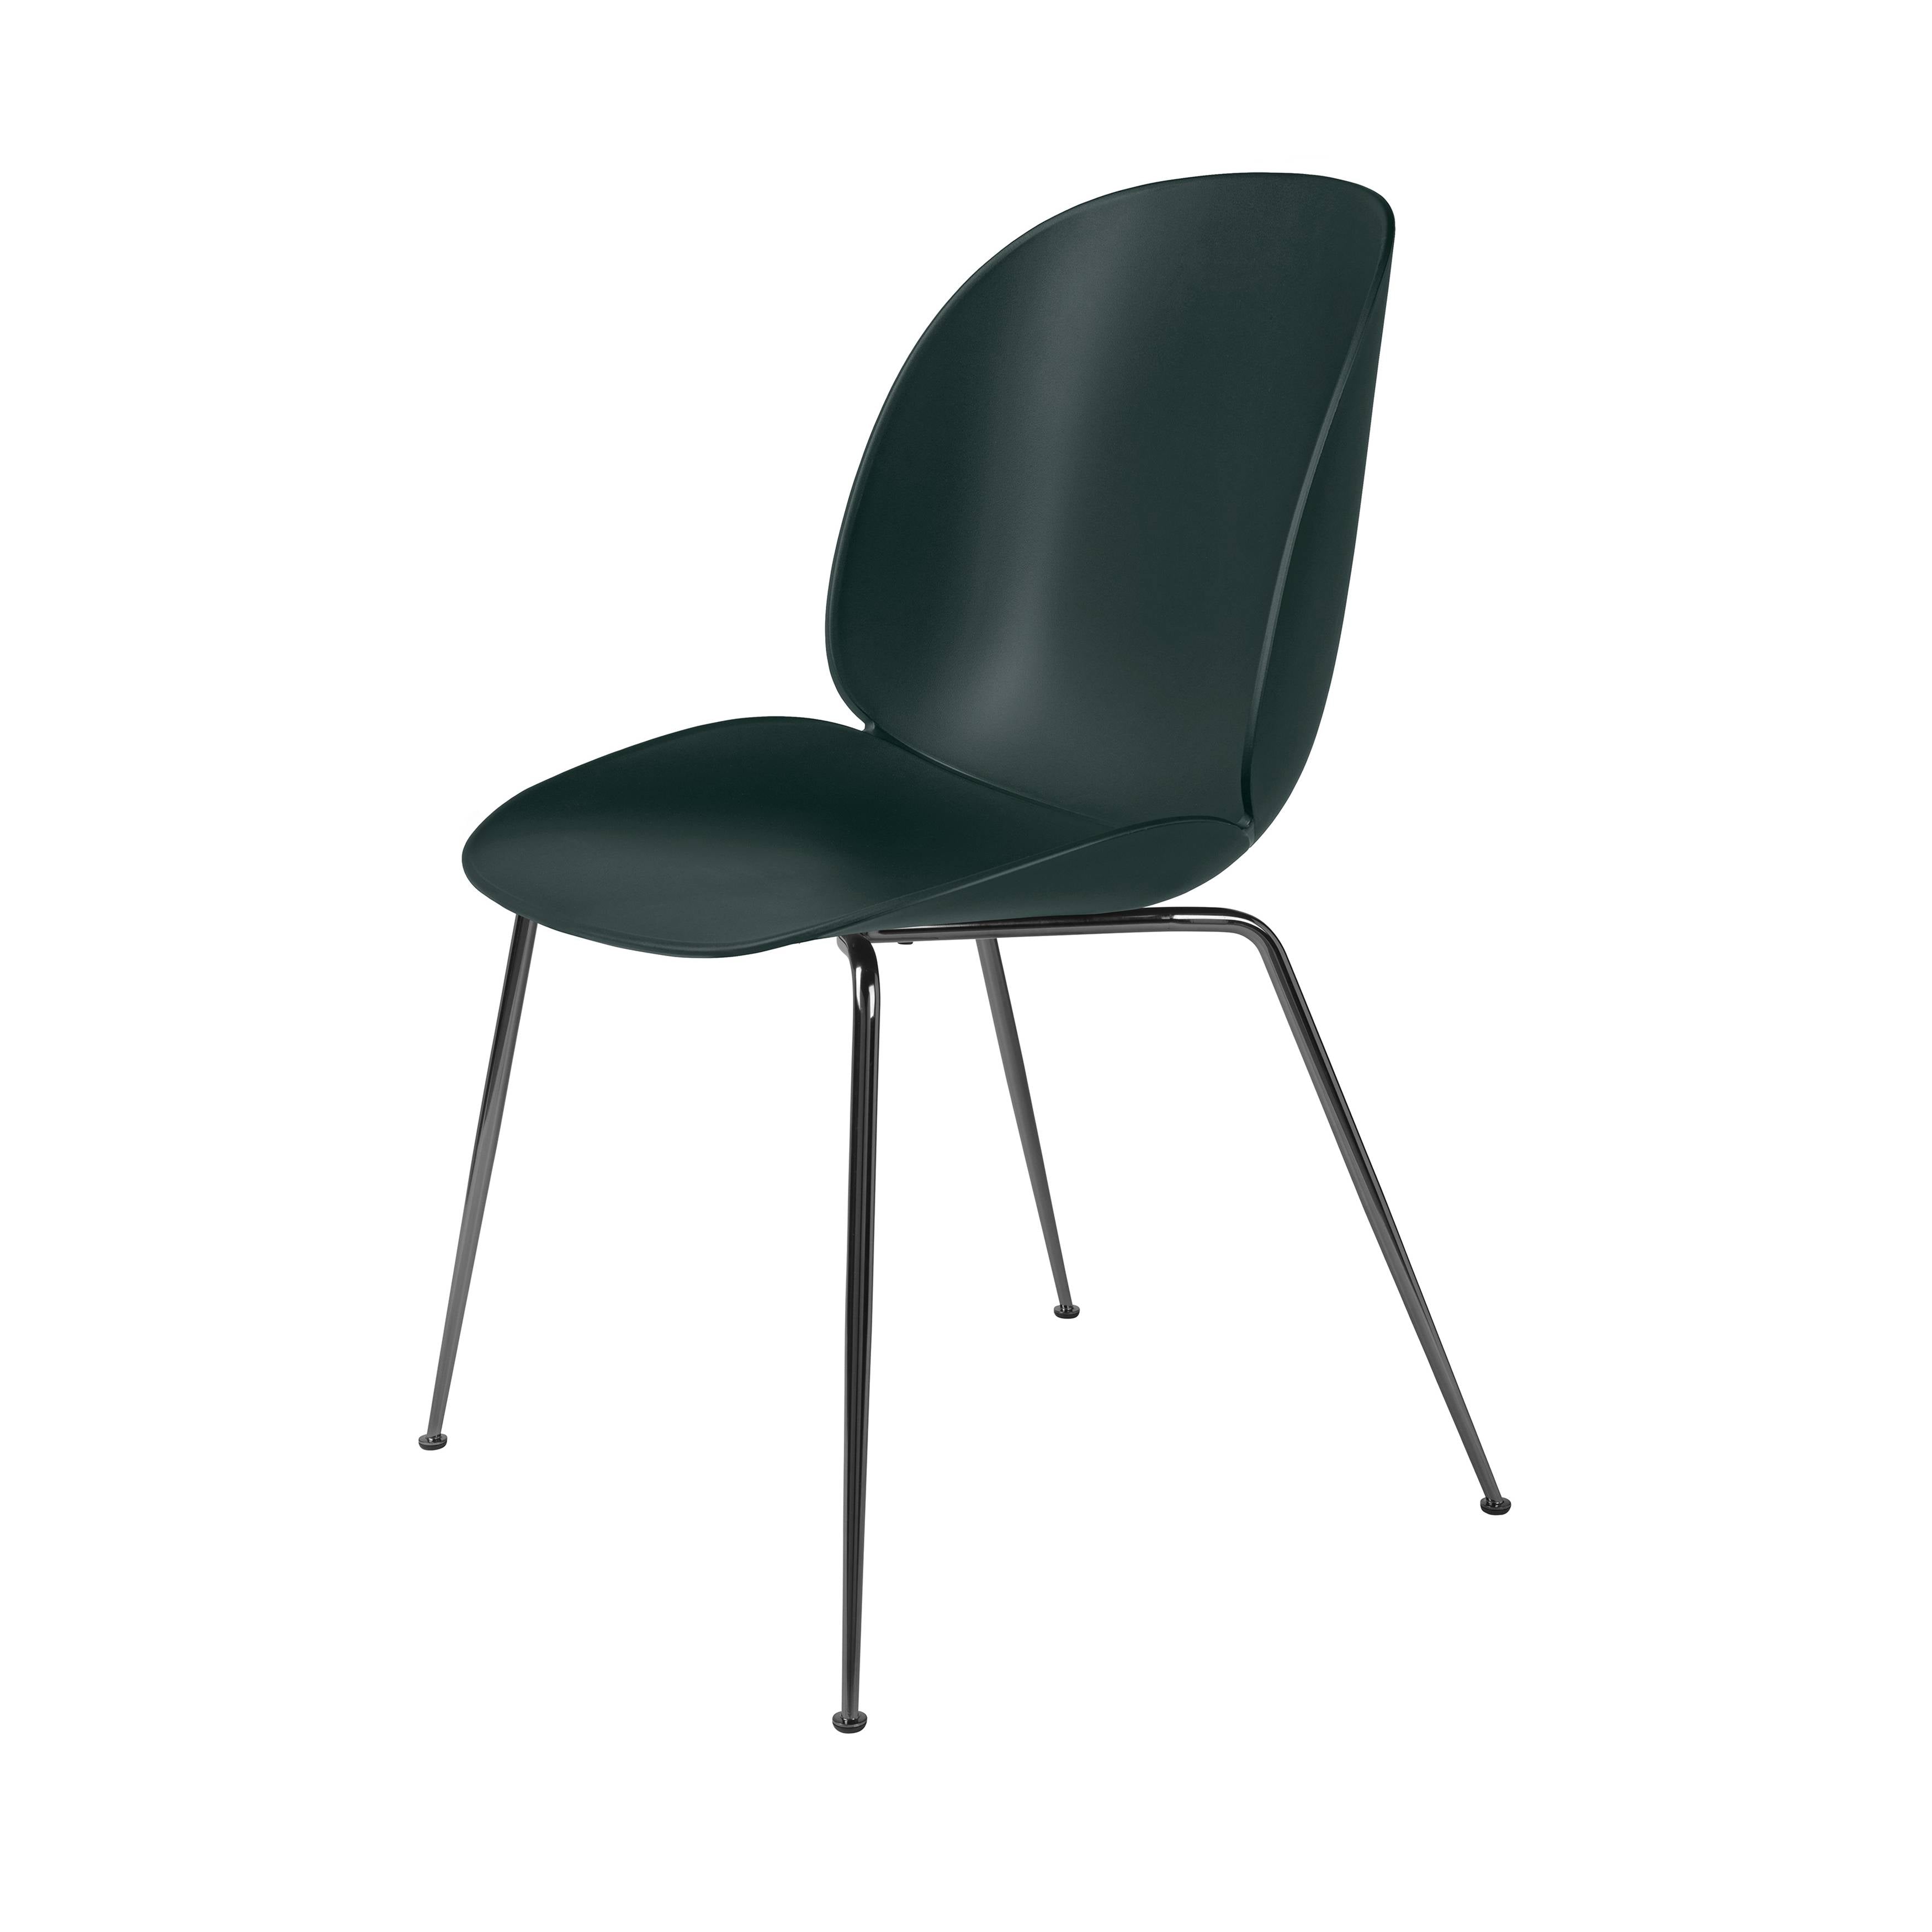 Beetle Dining Chair: Conic Base + Dark Green + Black Chrome + Felt Glides